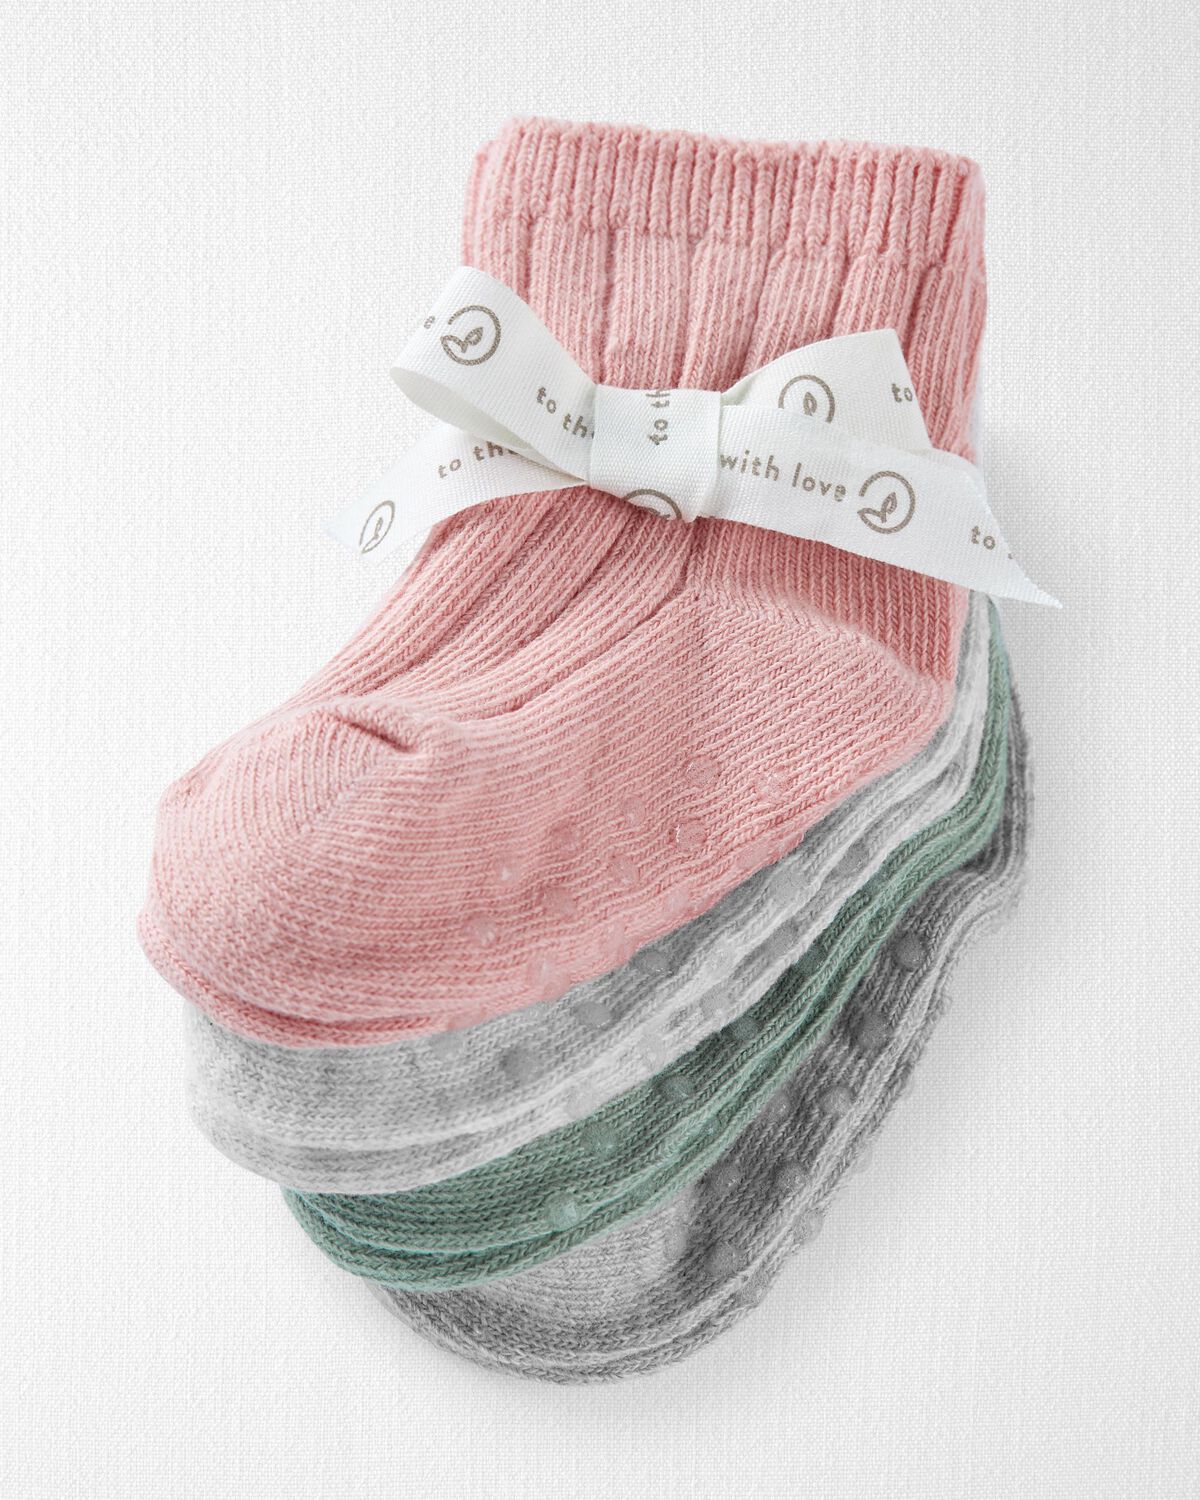 Grip Socks for Infants Toddlers Babies Kids Boys Girls 4pk 